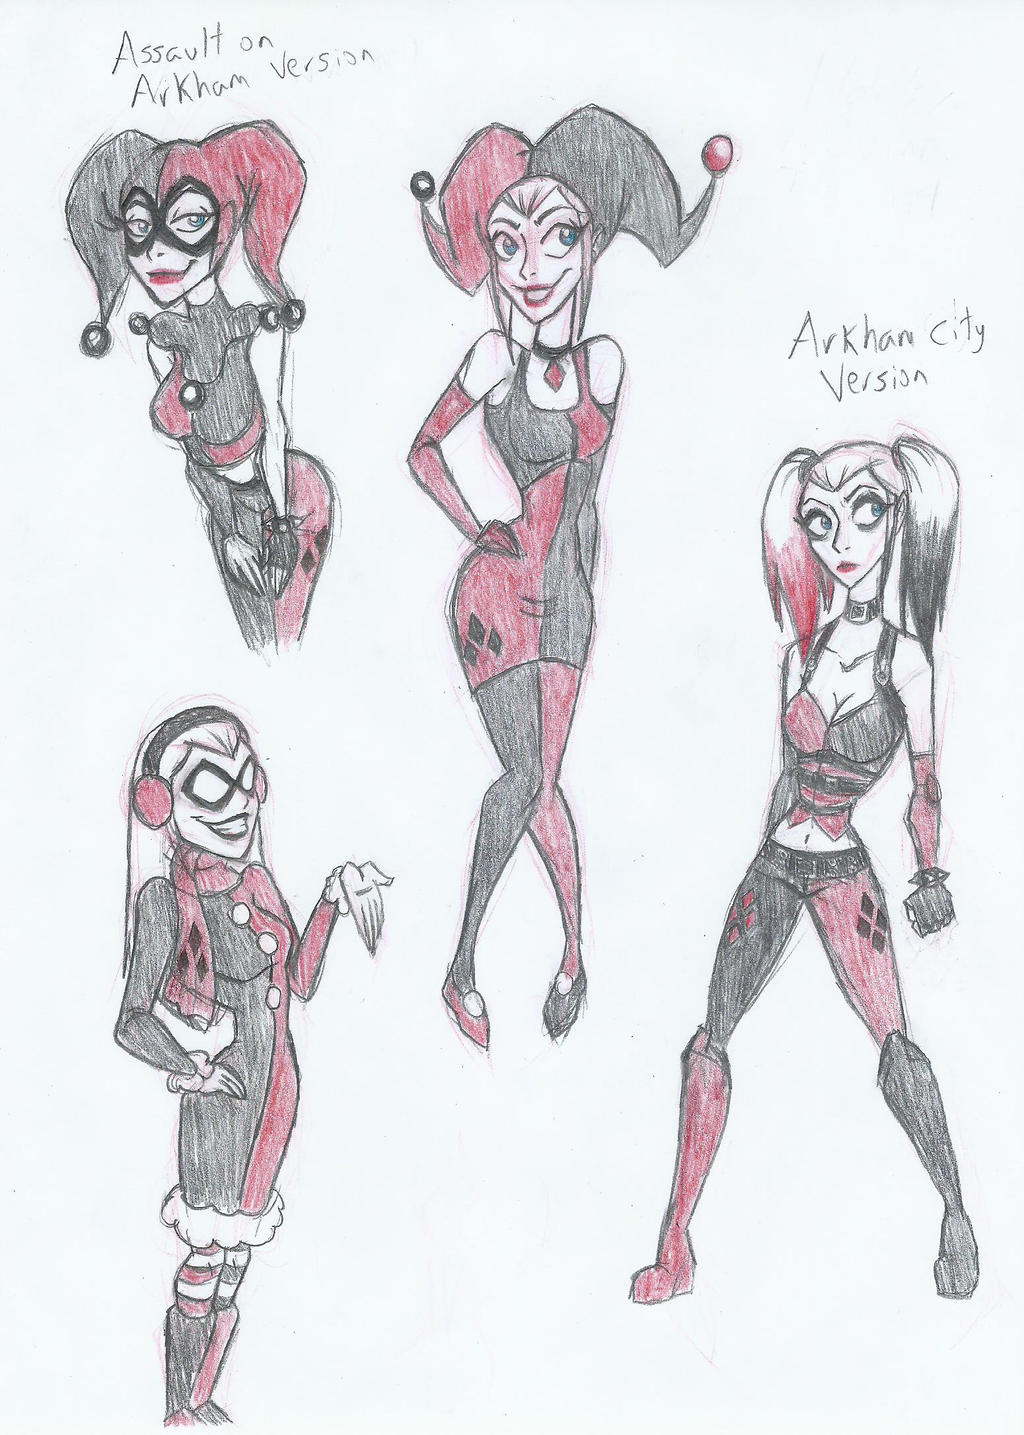 TB Harley Quinn costumes (sketches) by MileenaKoopa on DeviantArt